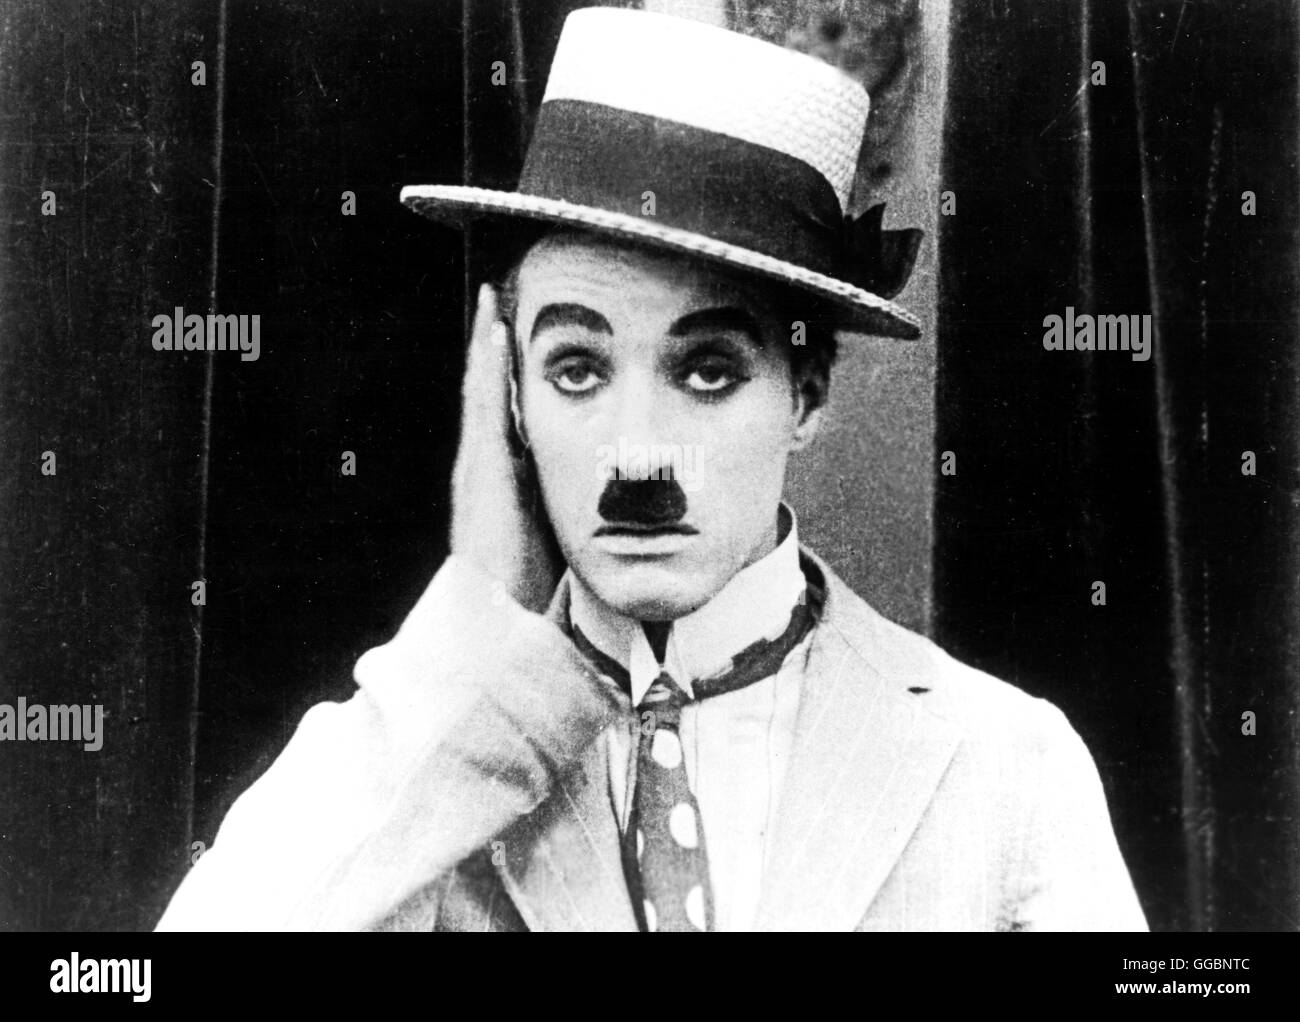 THE CURE / 1917 / Charlie Chaplin, Hut, Kreissaege, Schnauzbart, Krawatte Stock Photo